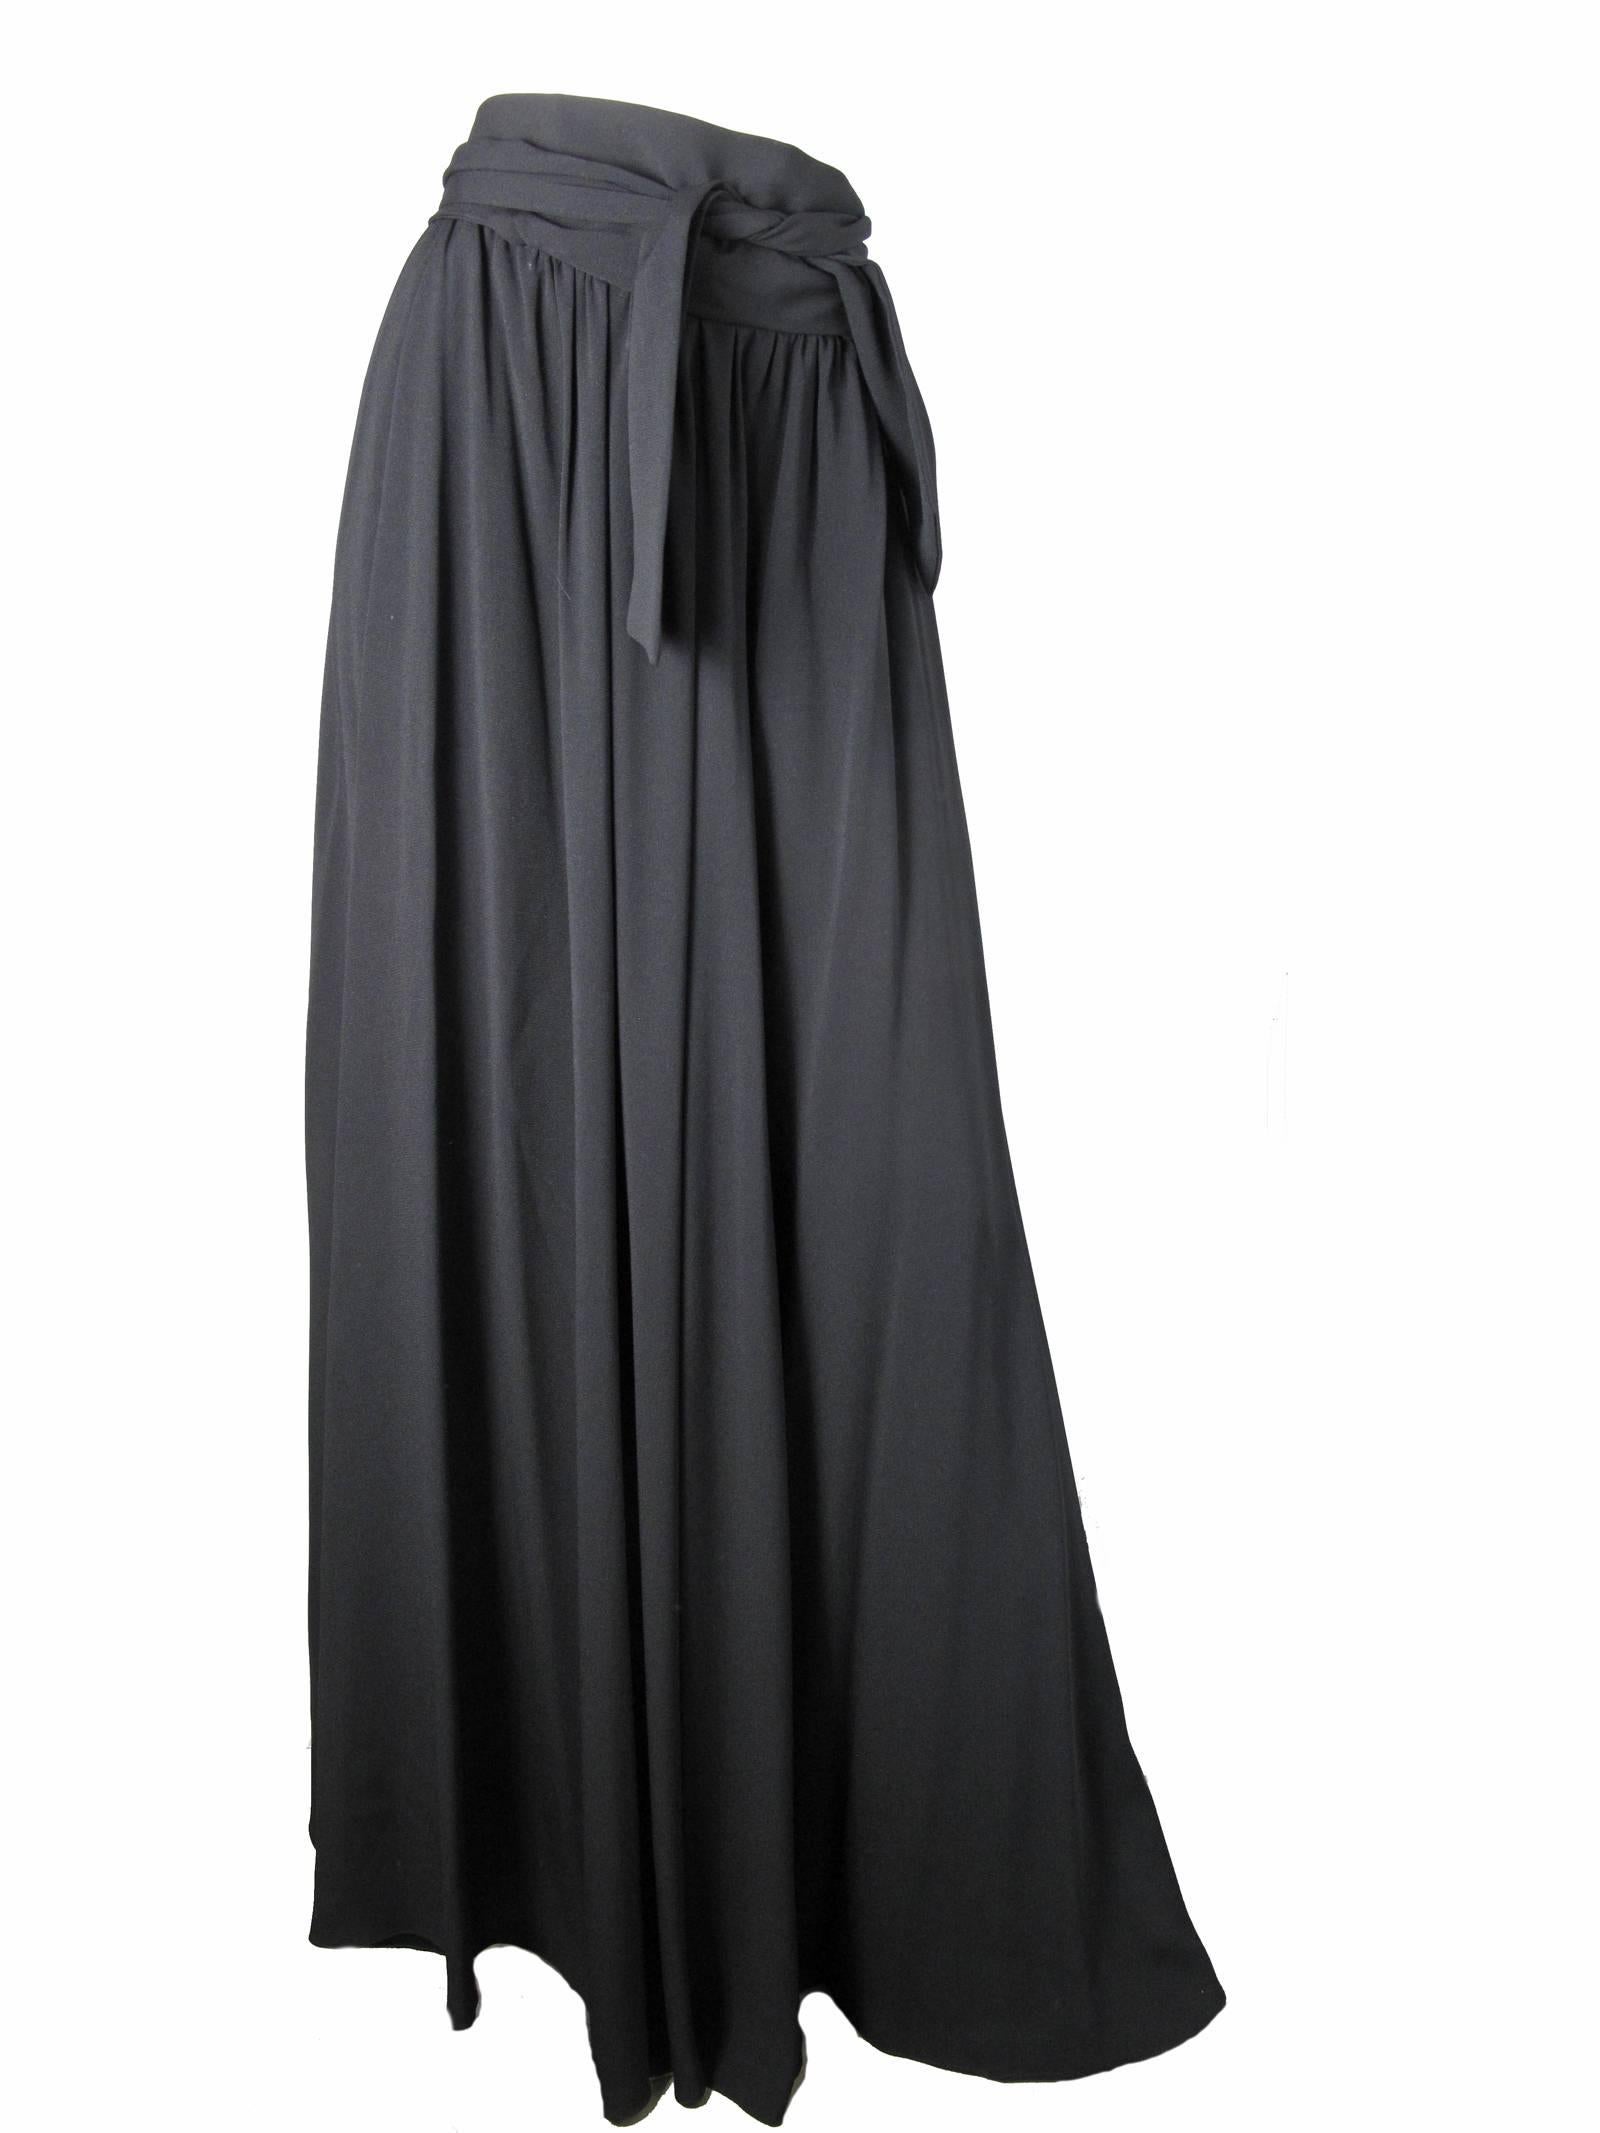 Black Oscar de la Renta Long Crepe Skirt and Floral Peasant Top